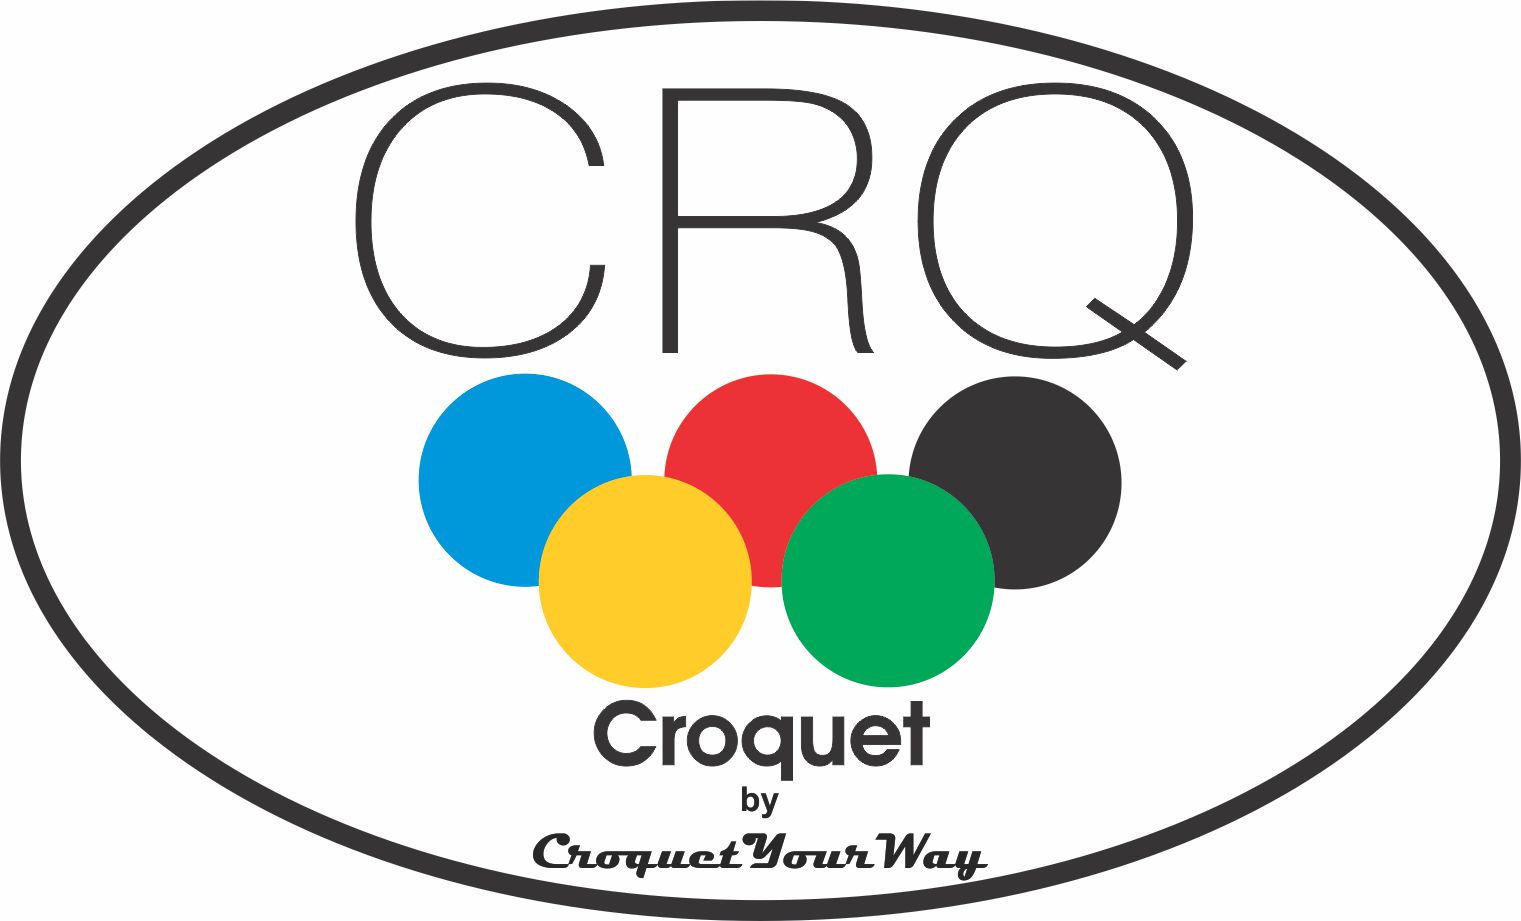 CRQ 713 Croquet Balls CRQ PRO-BALZ, USA, Classic, High Action, 10.8 oz, Yellow